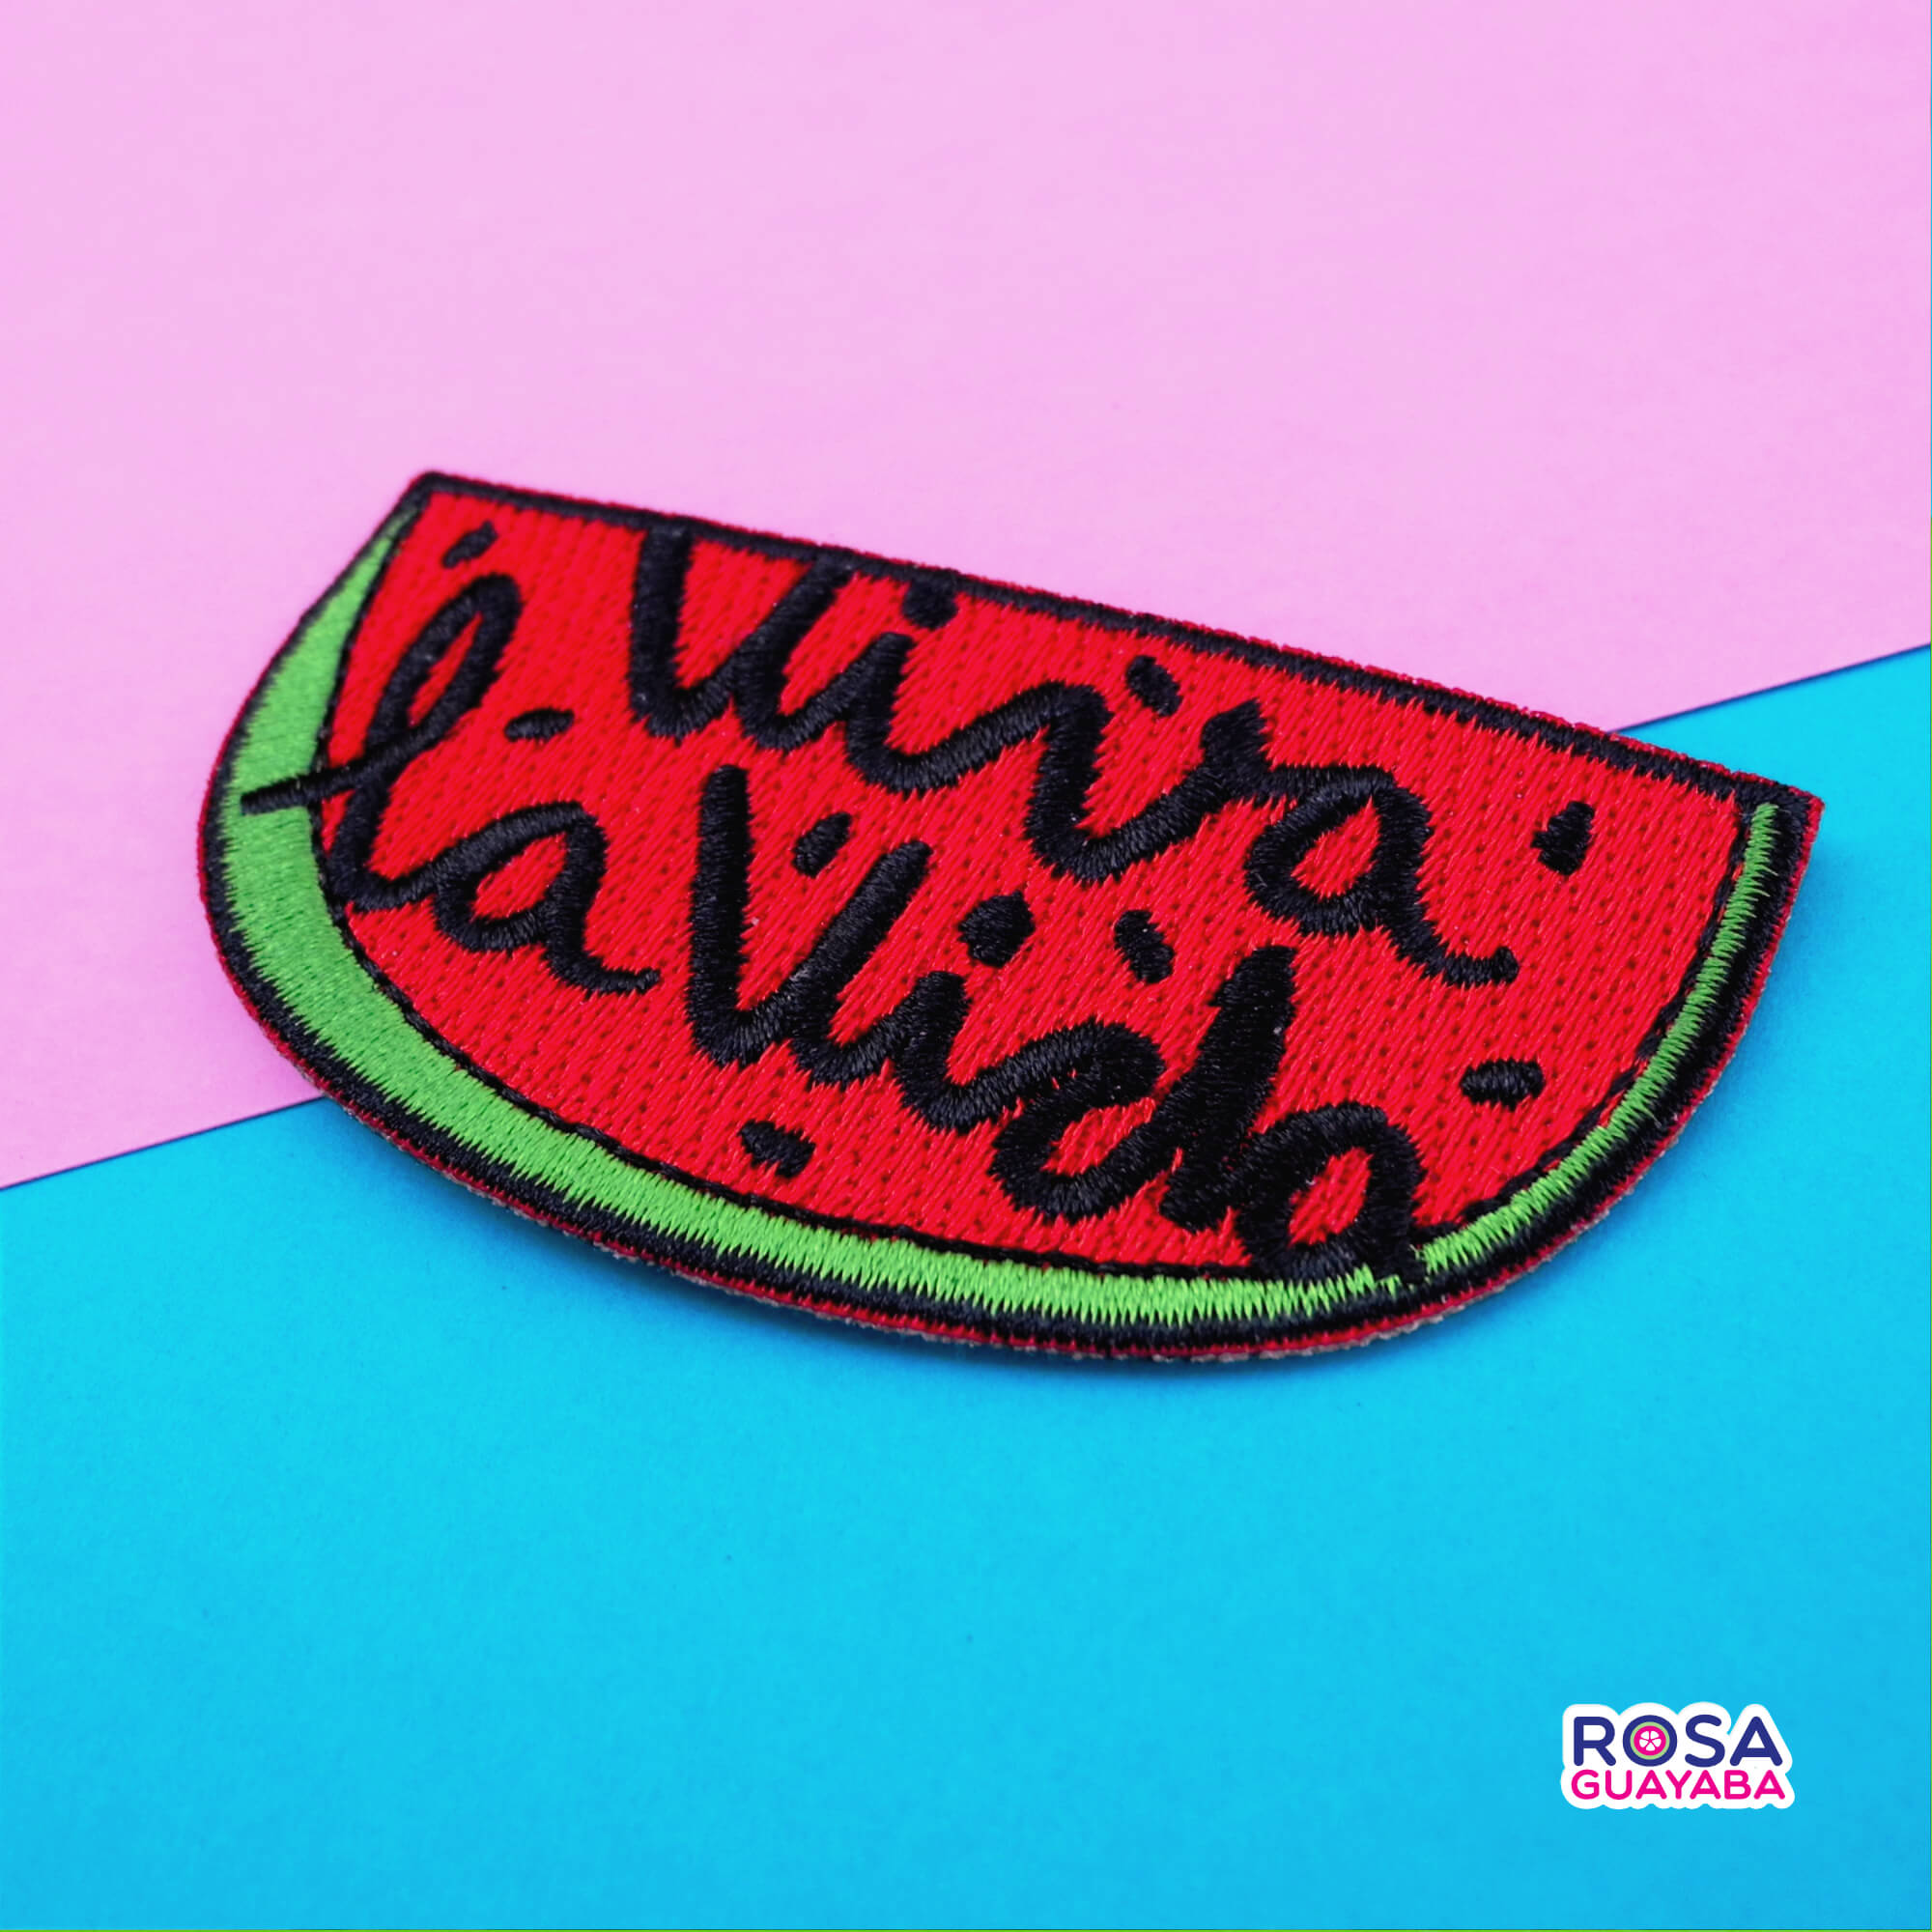 Viva la Vida - Frida Kahlo iron-on patch